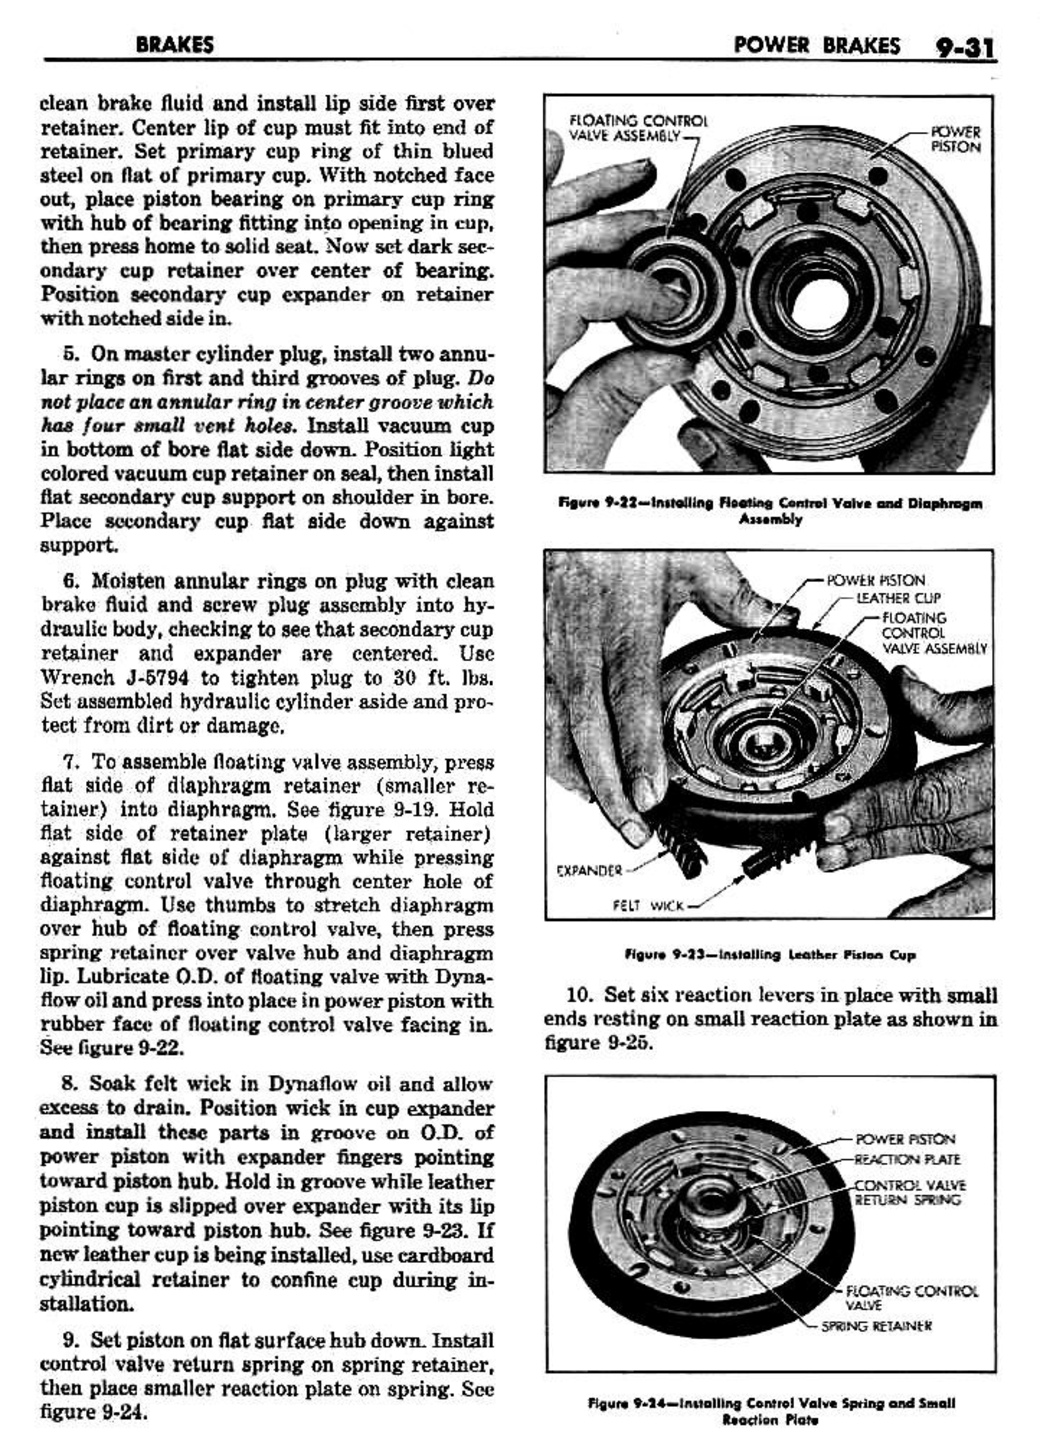 n_10 1959 Buick Shop Manual - Brakes-031-031.jpg